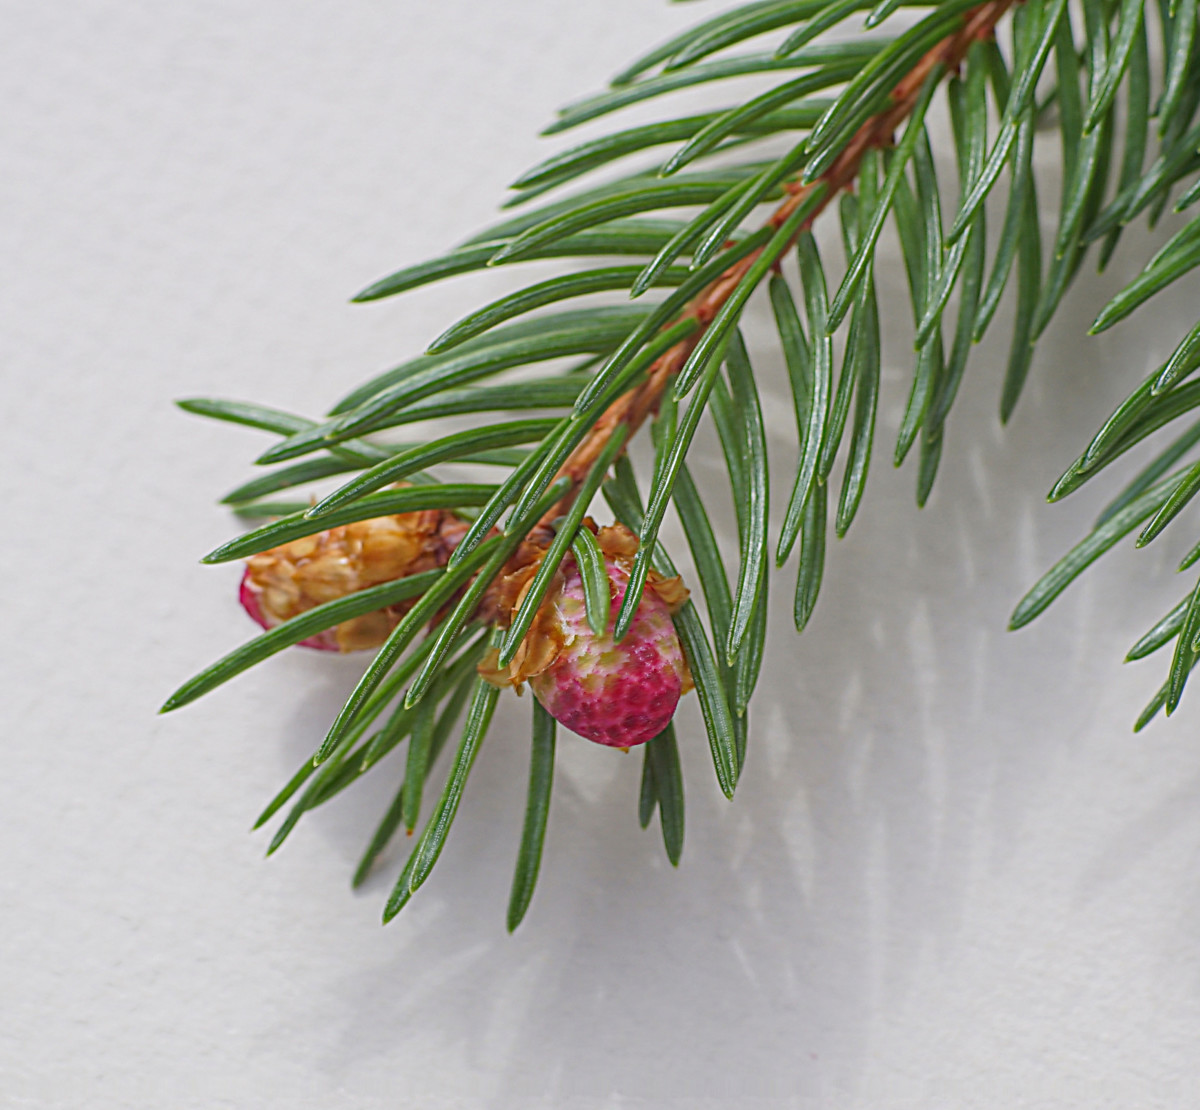 Norway Spruce pollen cones (male)